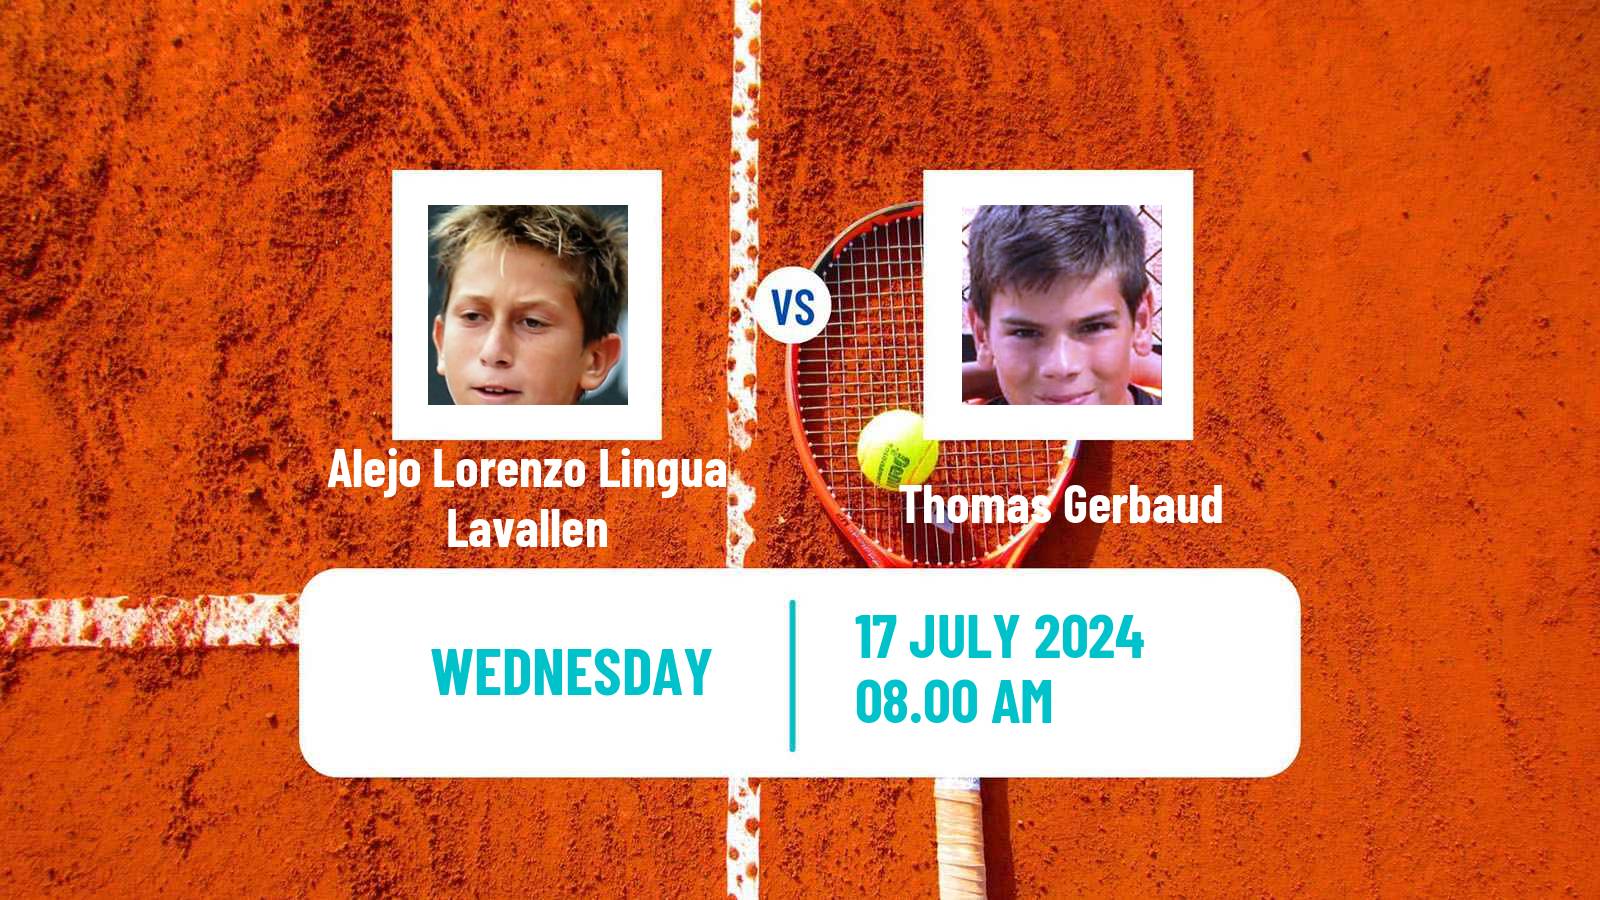 Tennis ITF M25 Esch Alzette 2 Men Alejo Lorenzo Lingua Lavallen - Thomas Gerbaud